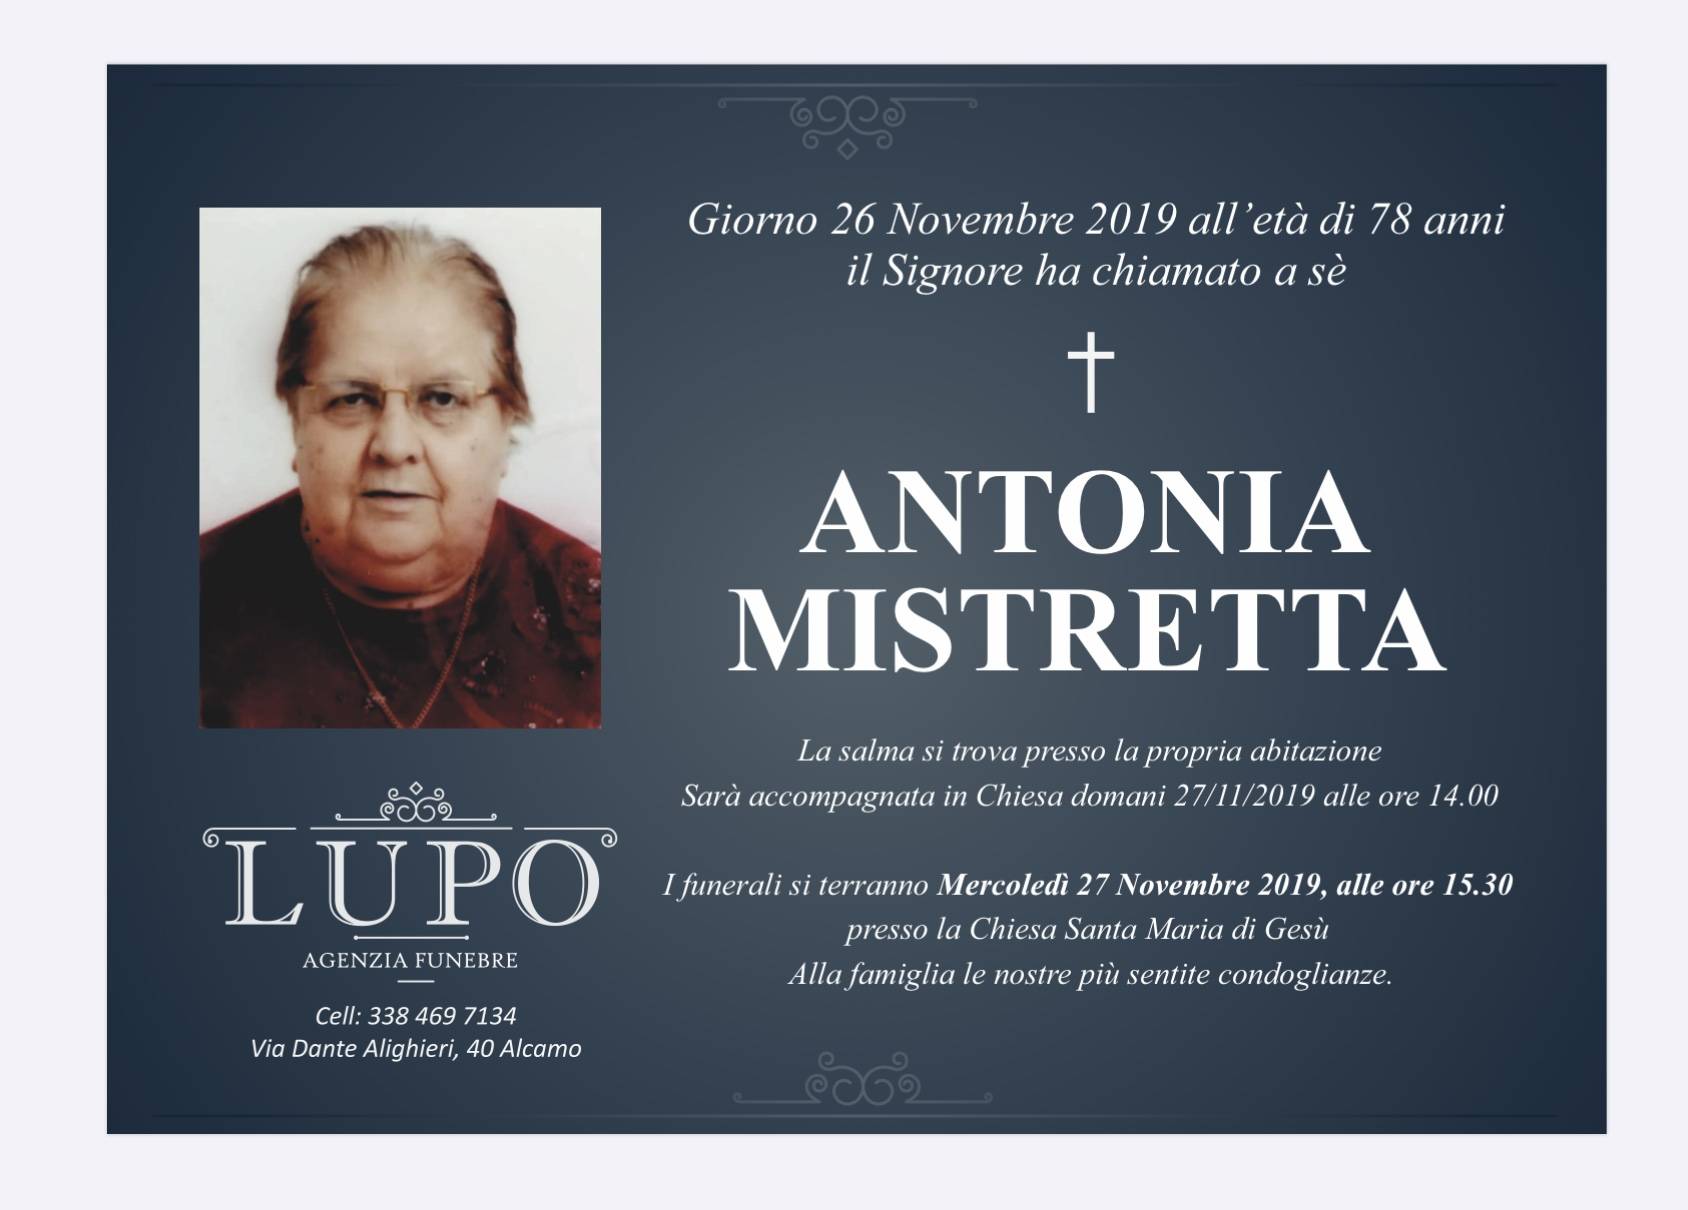 Antonia Mistretta